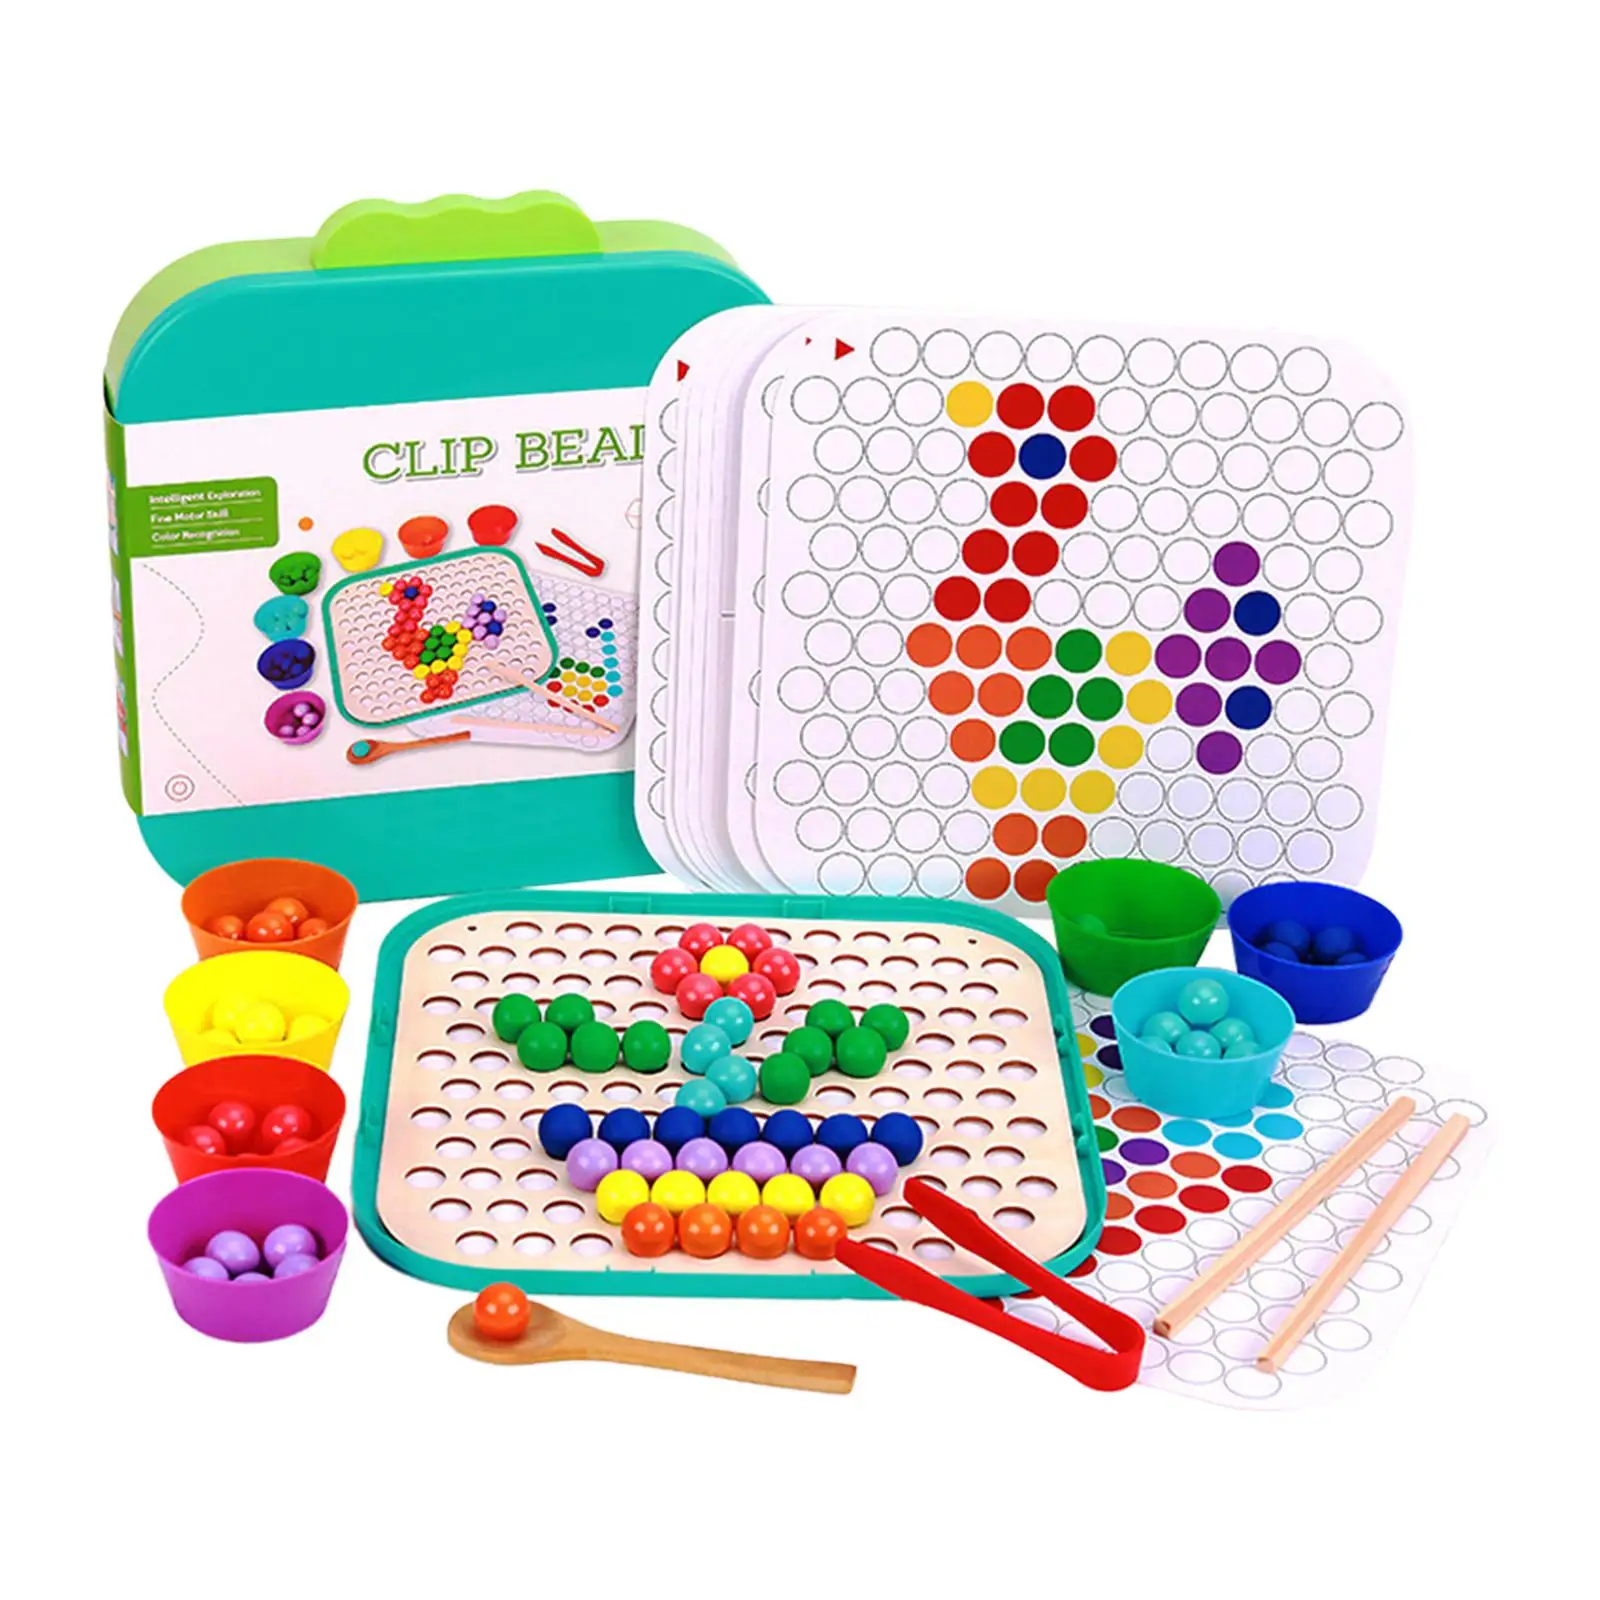 Rainbow Clip Bead Puzzle Educational Wooden Peg Board Beads Game for Coordination Preschool Primary Kindergarten Activity